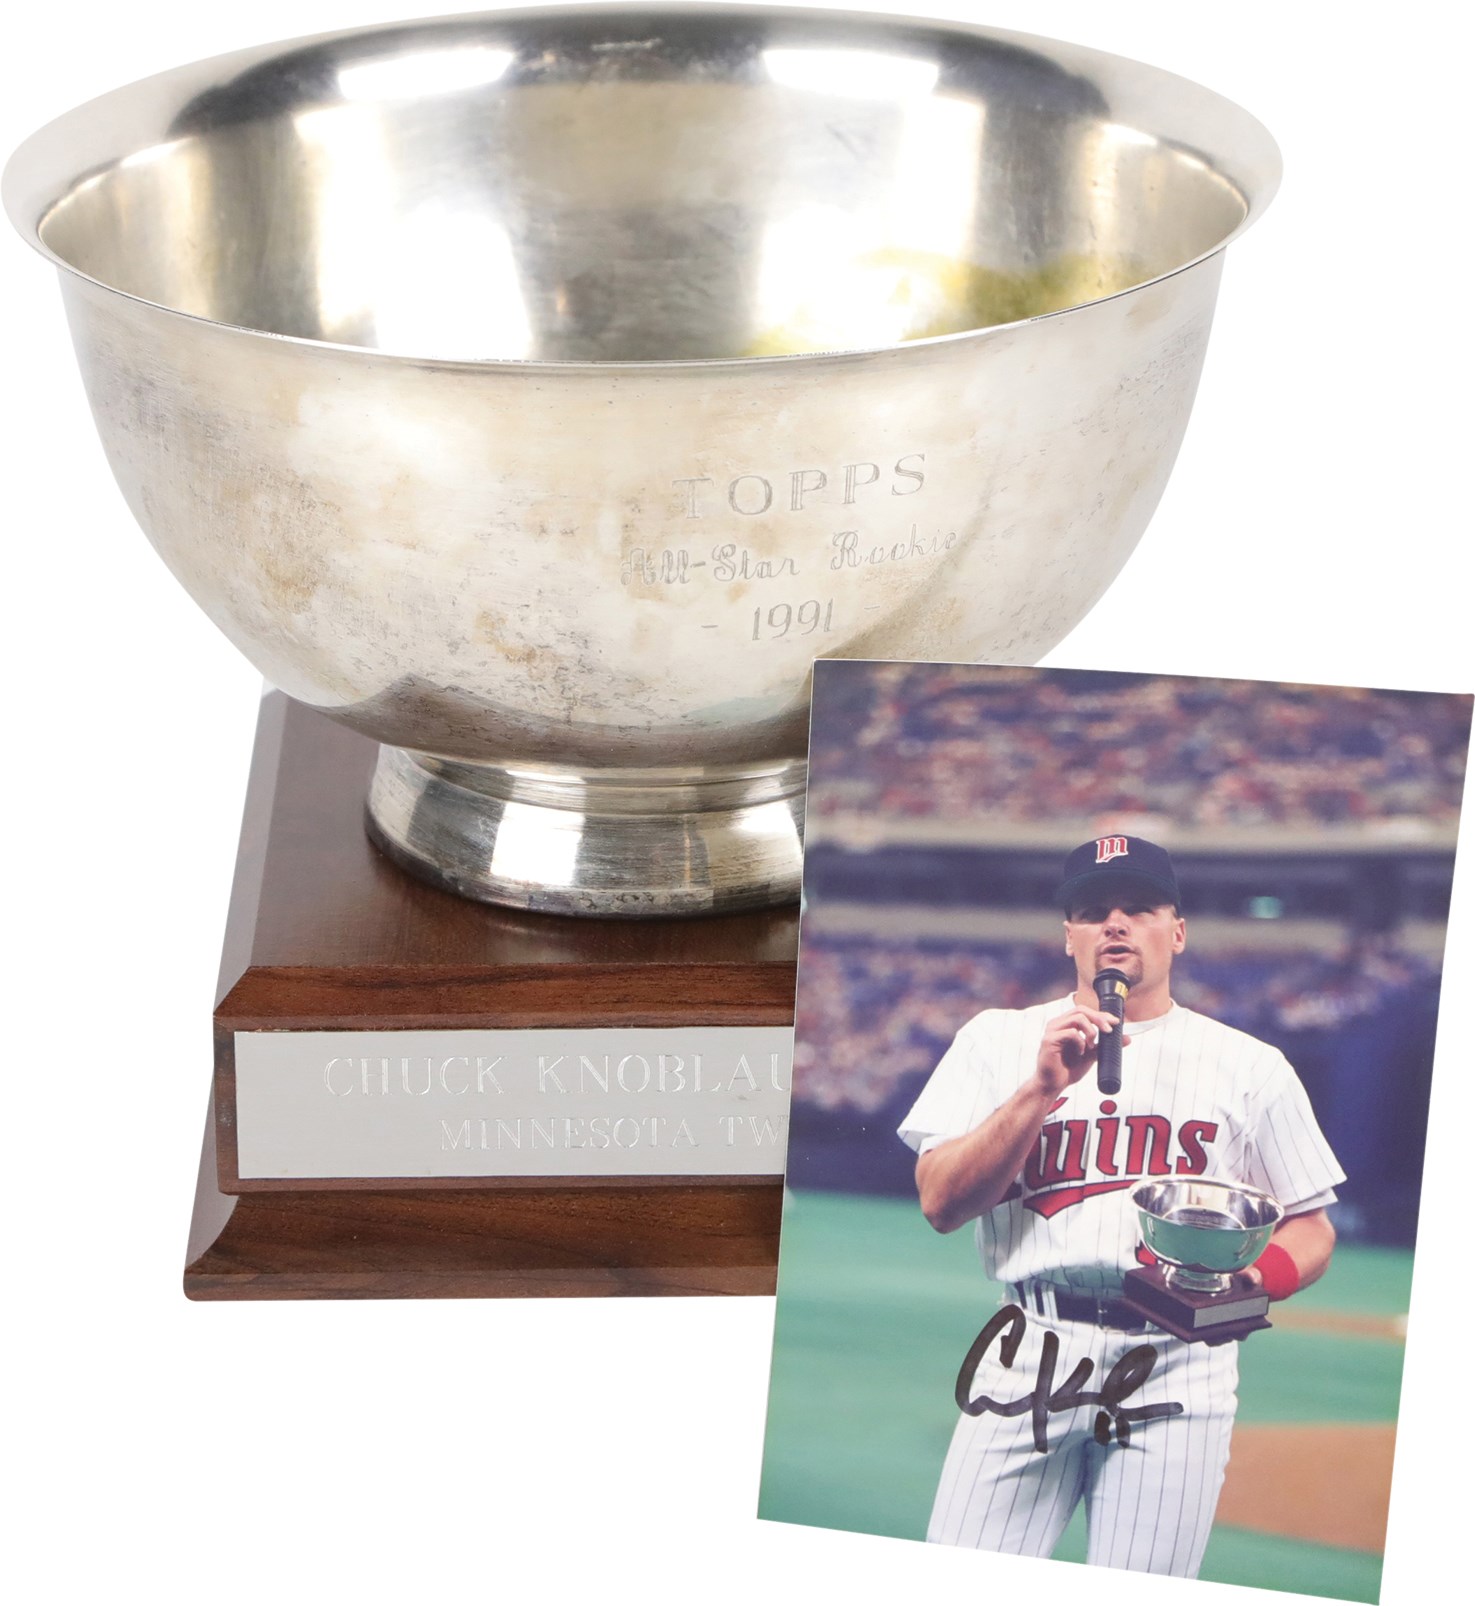 Baseball Awards - 1991 Chuck Knoblauch Topps All Star Rookie Award (Knoblauch Letter)